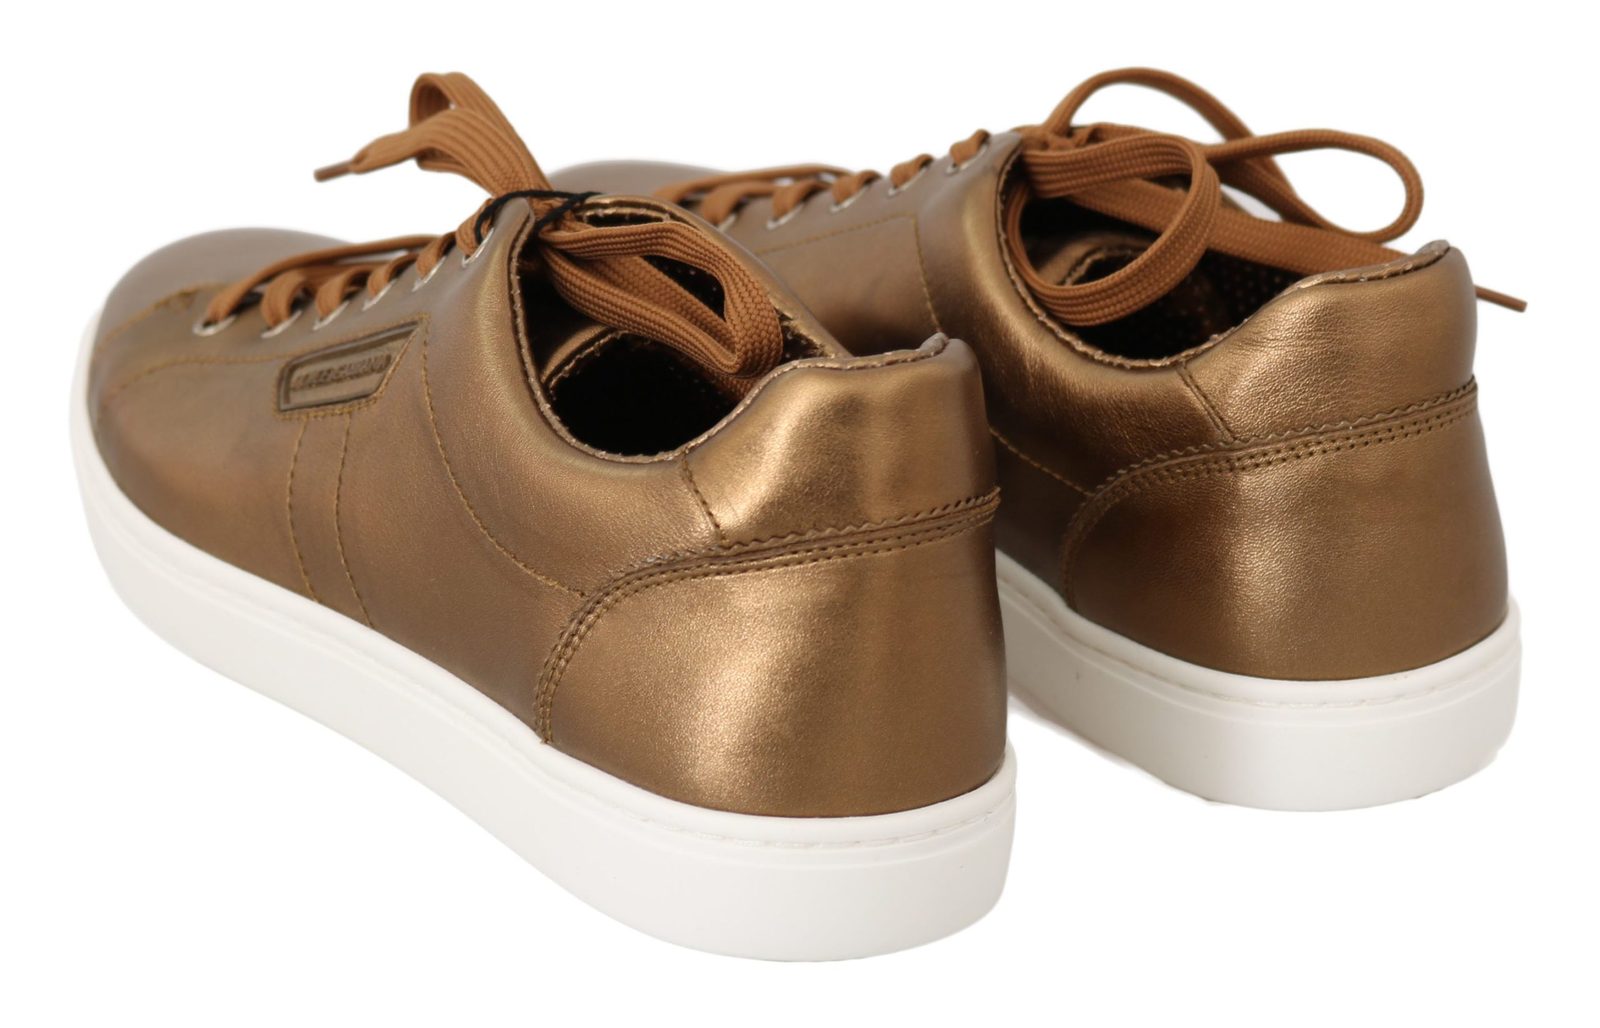 Reg$160 Sale $89.99 Size 11 & 12 LACOSTE Leather Suede Mens Sneaker Shoe 